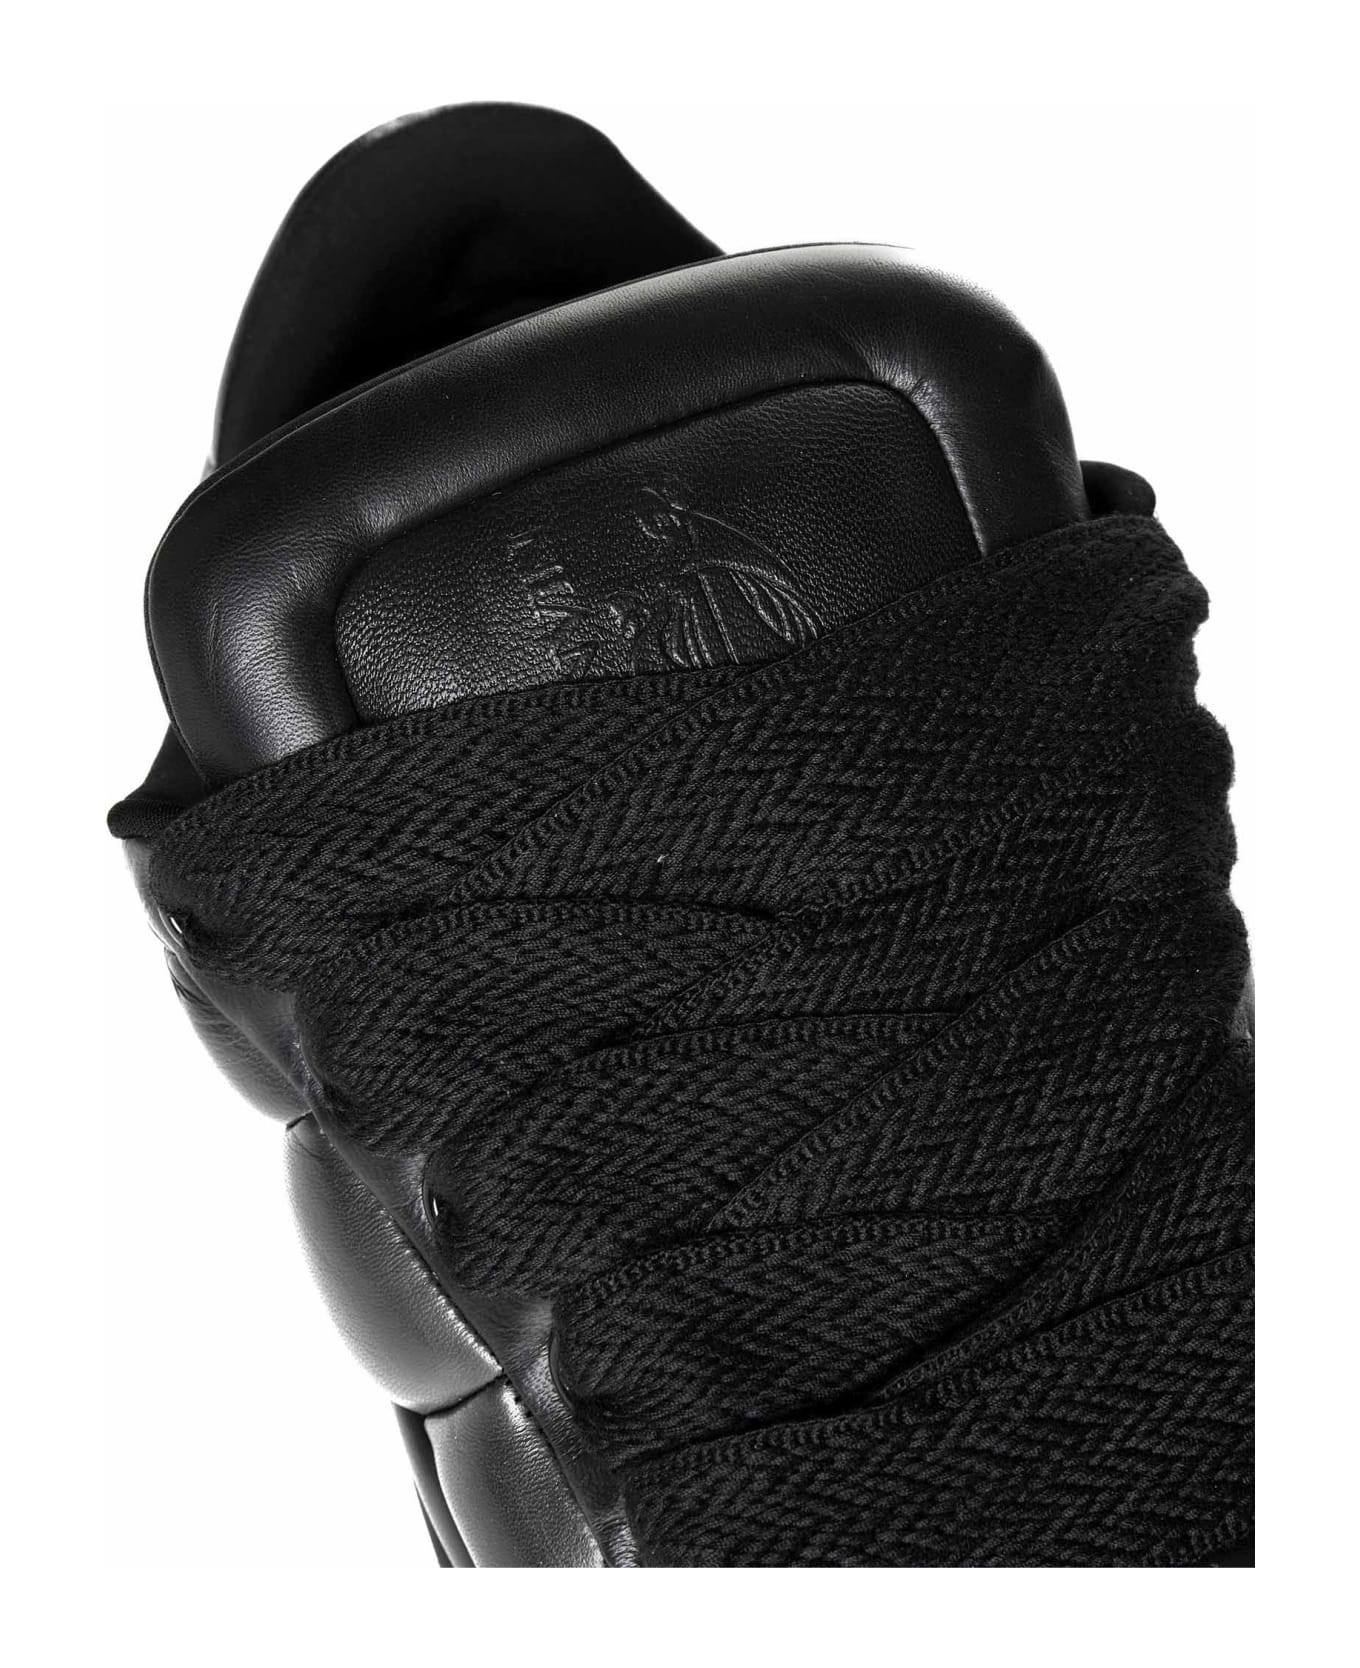 Lanvin Sneakers - Monarch/black